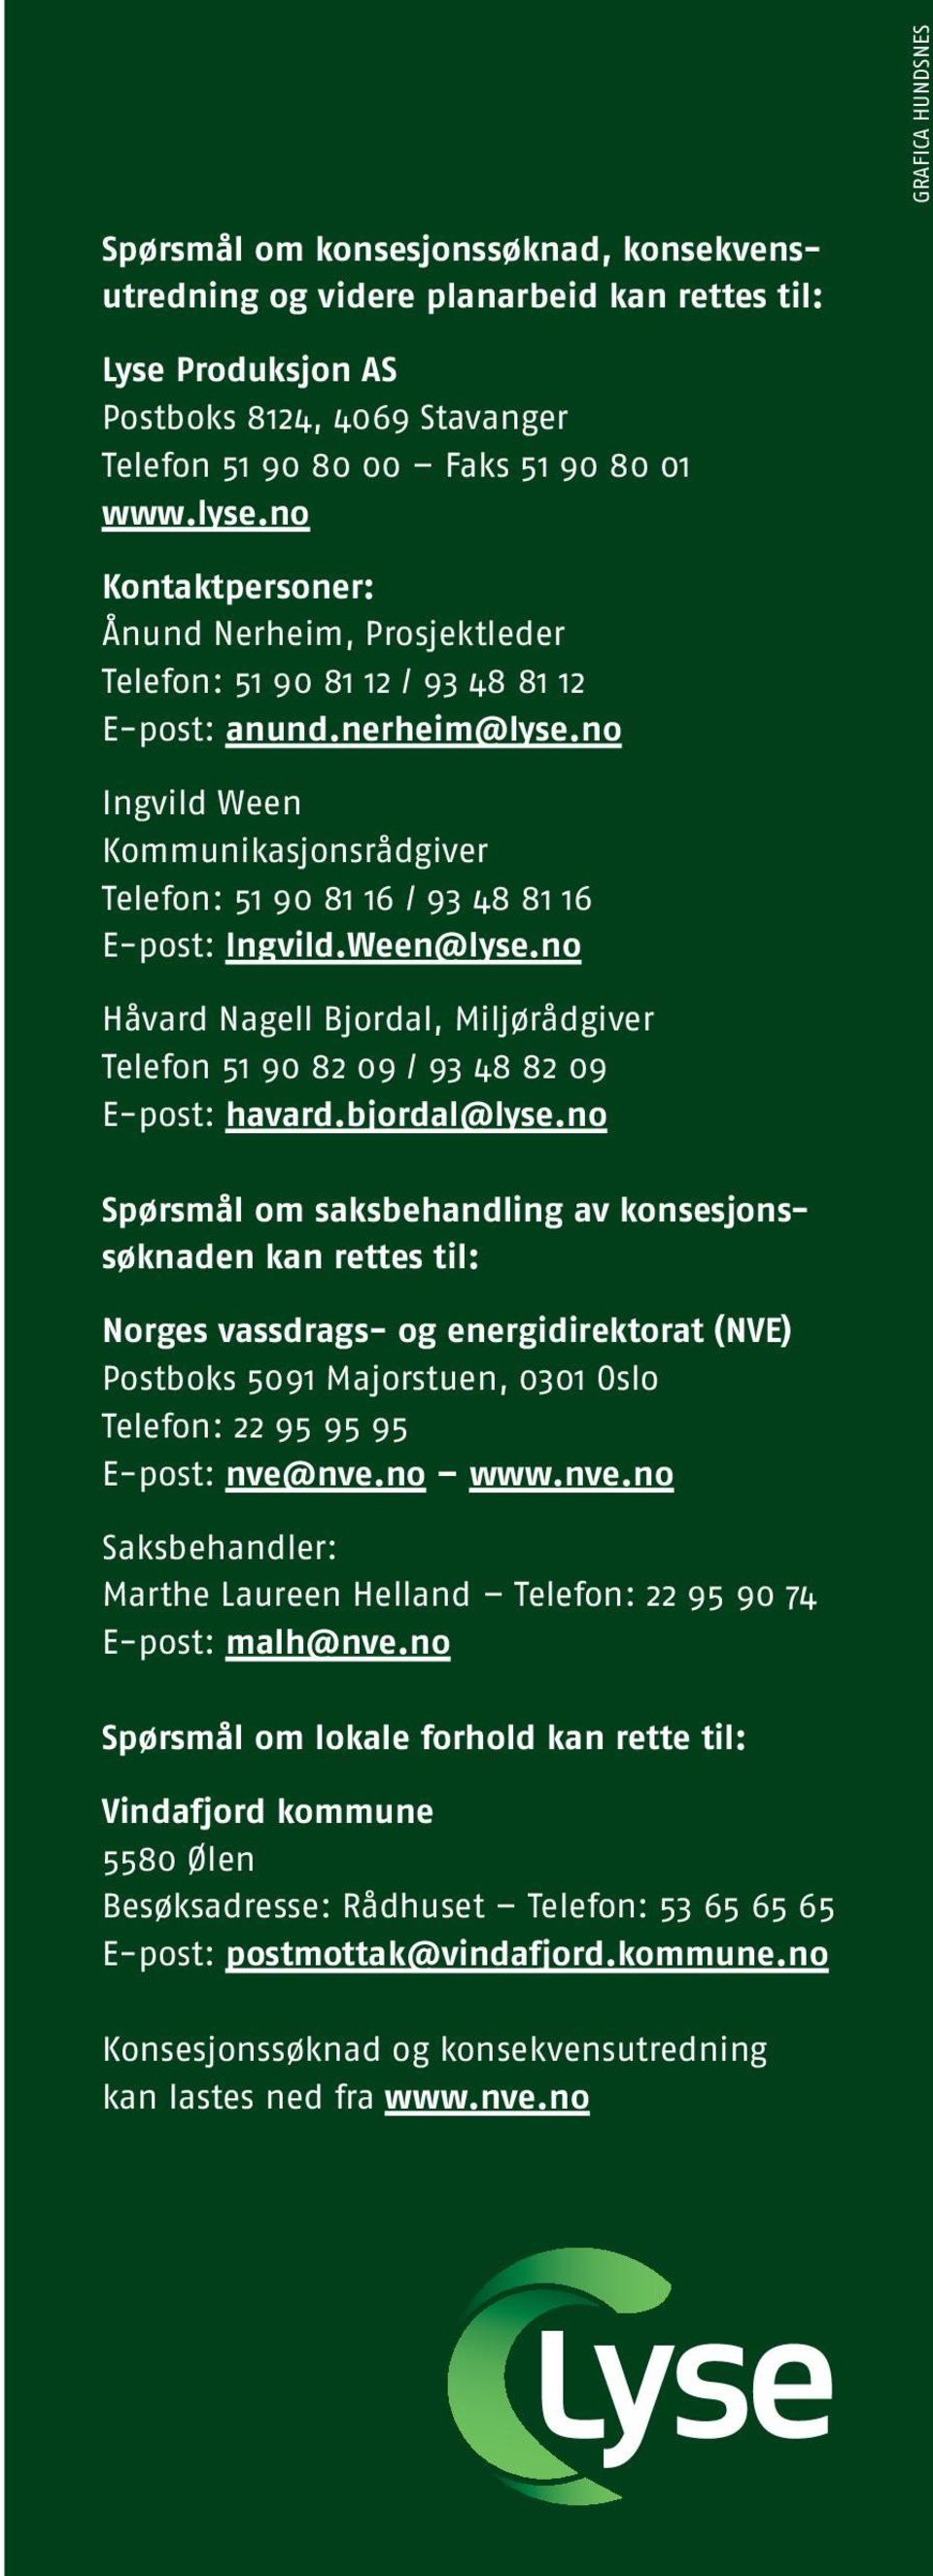 Ween@lyse.no Håvard nagell Bjordal, Miljørådgiver Telefon 51 90 8 09 / 93 48 8 09 E-post: havard.bjordal@lyse.